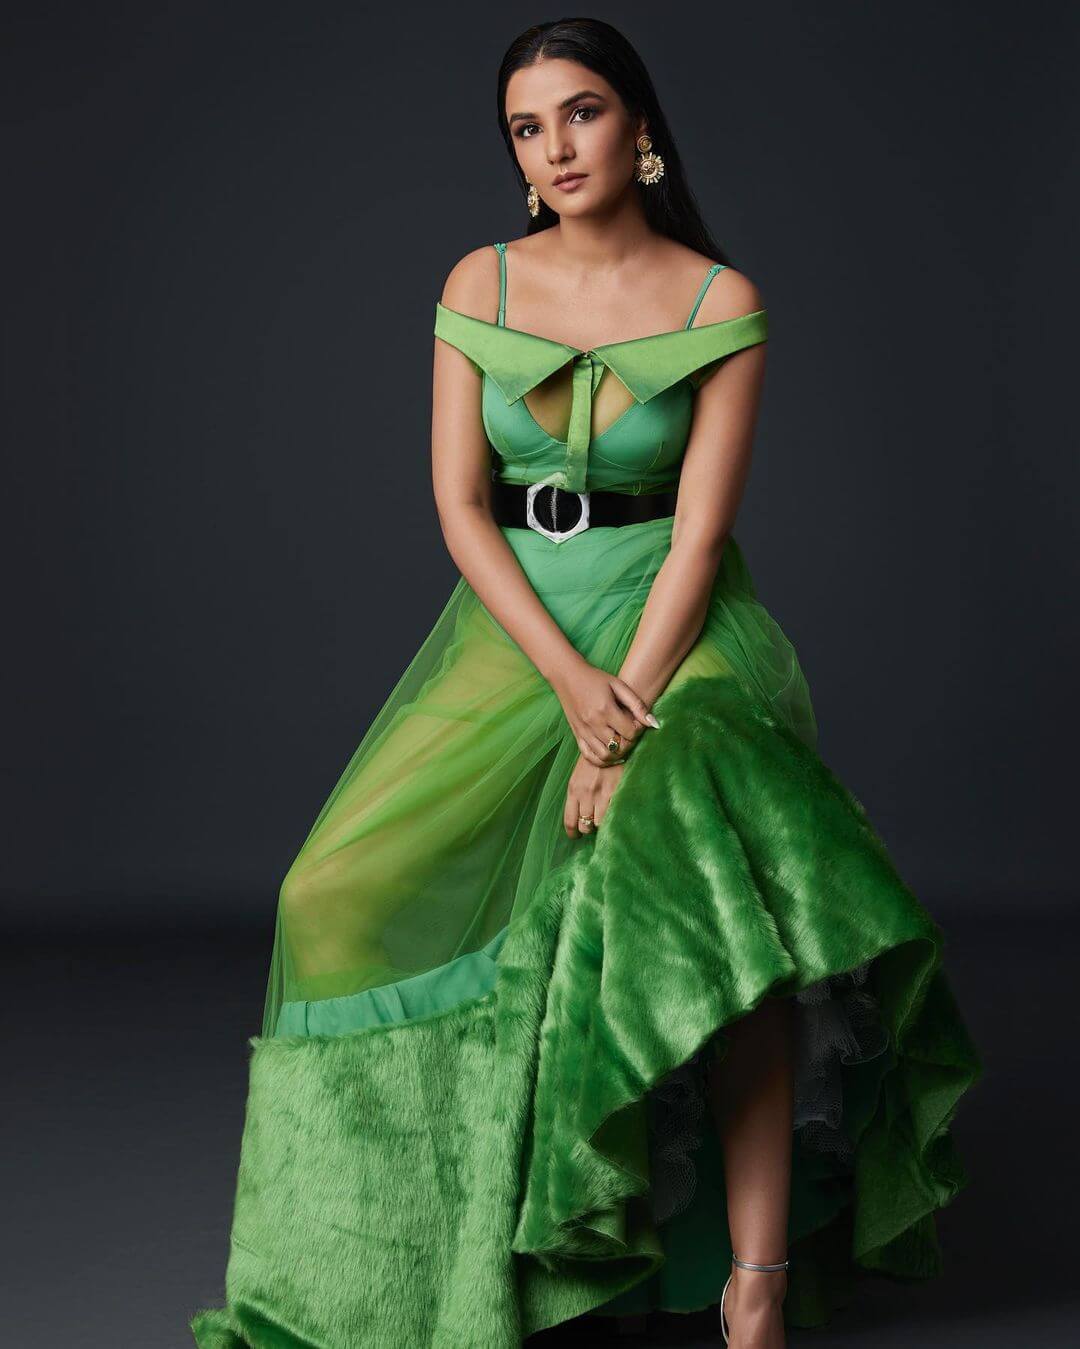 Jasmin Bhasin Sophisticated & Sexy Look In Green Dress